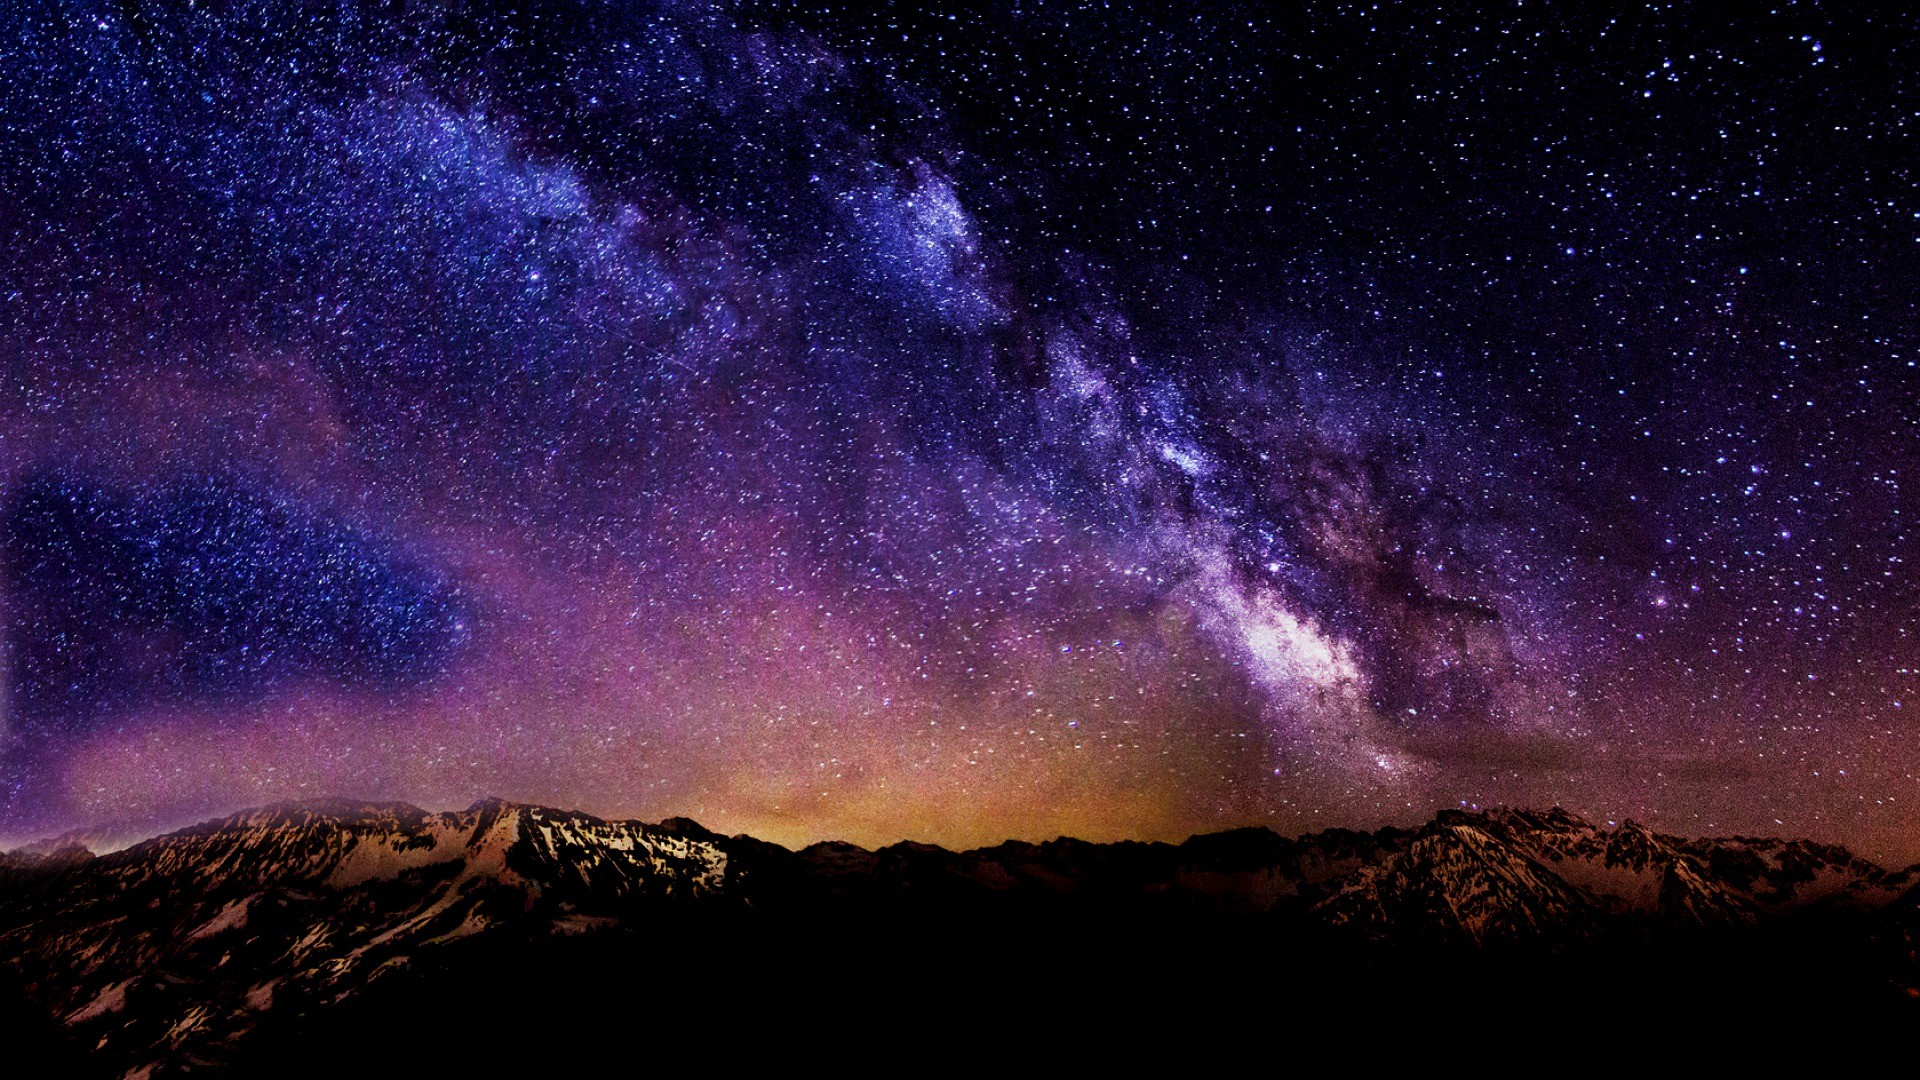 Images Starry Night Wallpapers Hd Data Src Download Desktop Background Night Sky 19x1080 Wallpaper Teahub Io